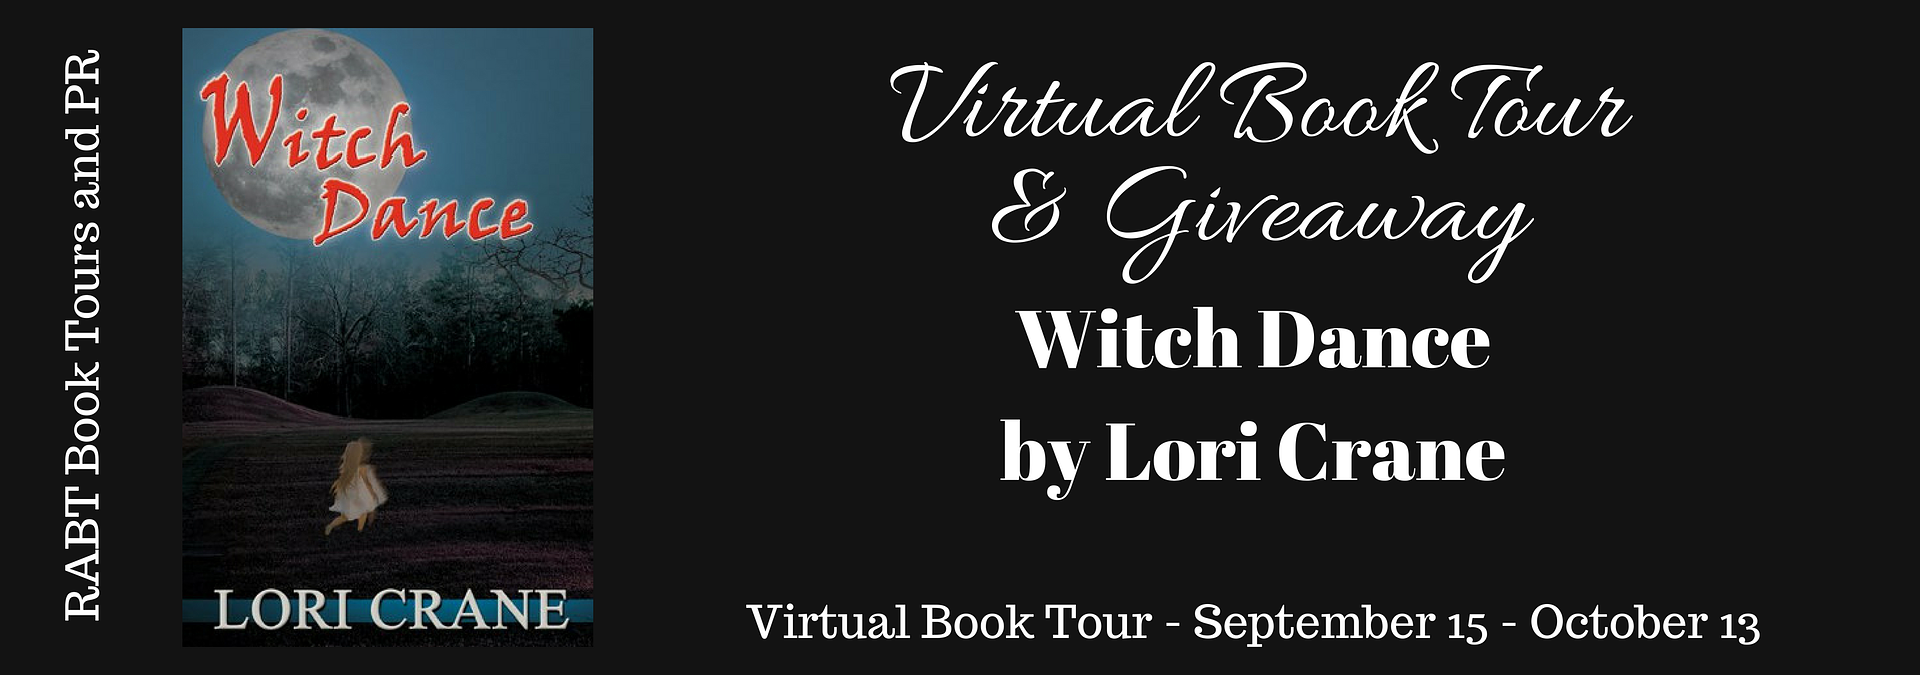 Virtual Book Tour: Witch Dance by Lori Crane @LoriCraneHess #giveaway #historical #thriller #booktour